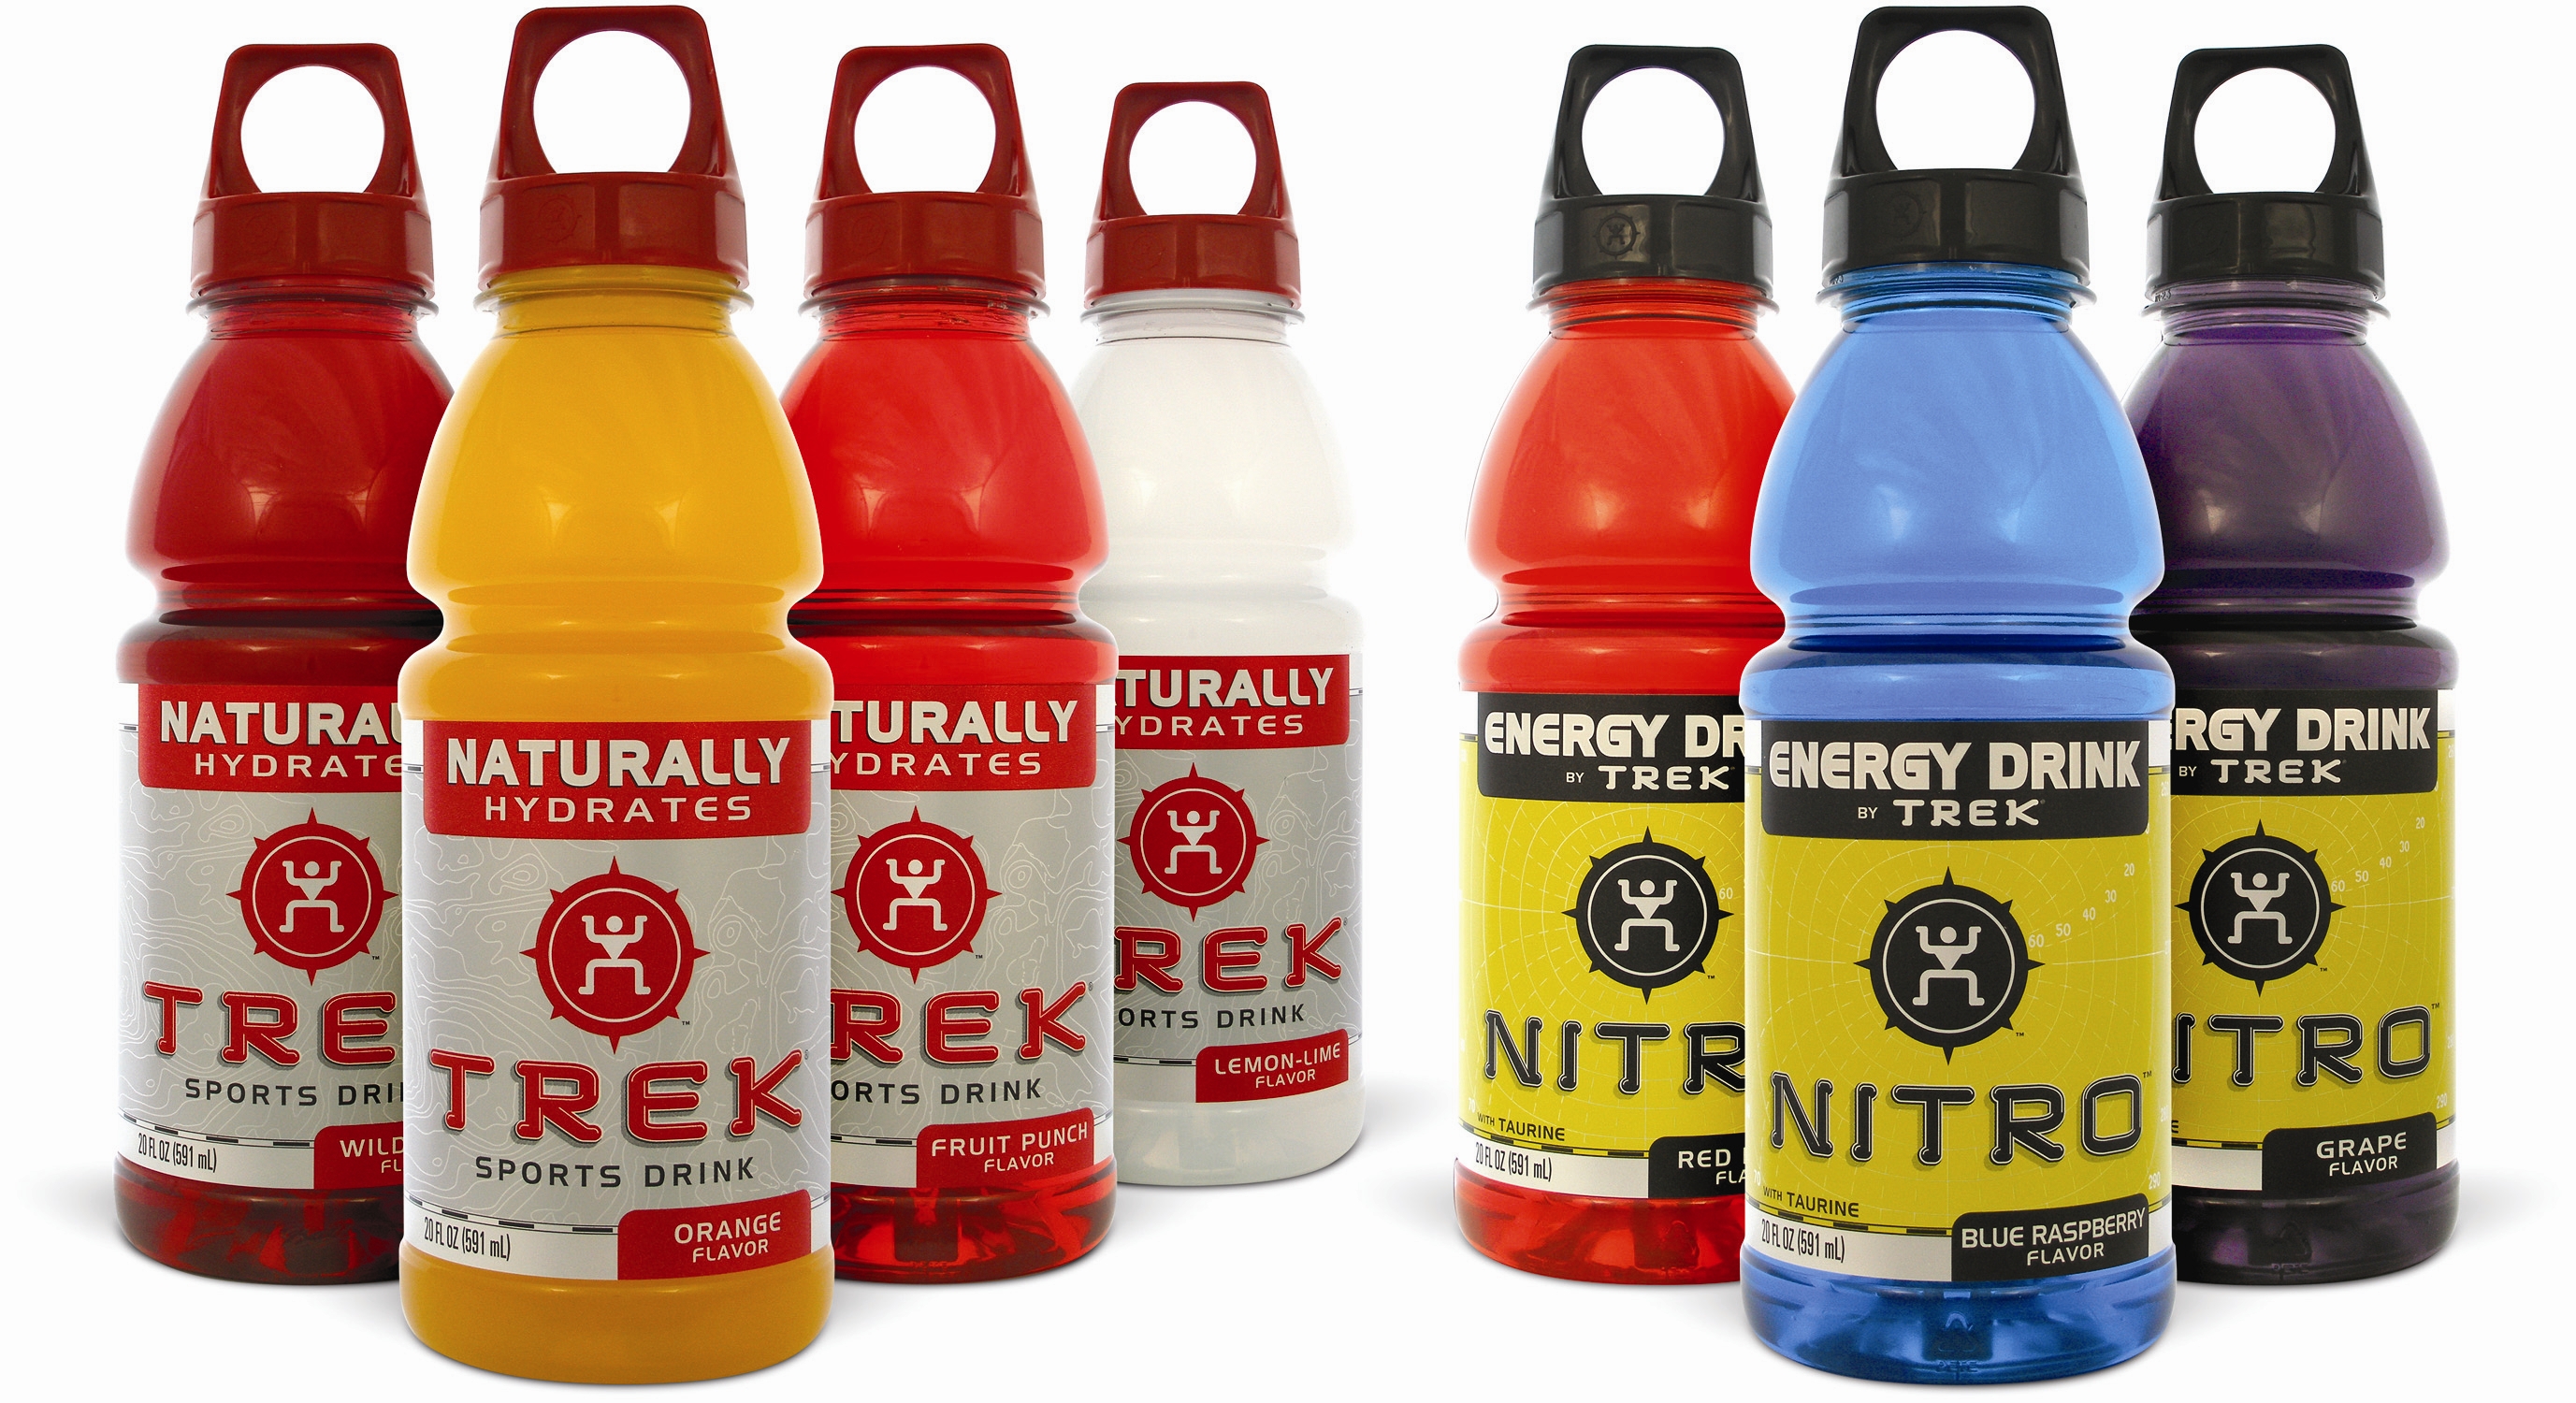 TREK Natural Sports Drinks and NITRO Energy Drinks